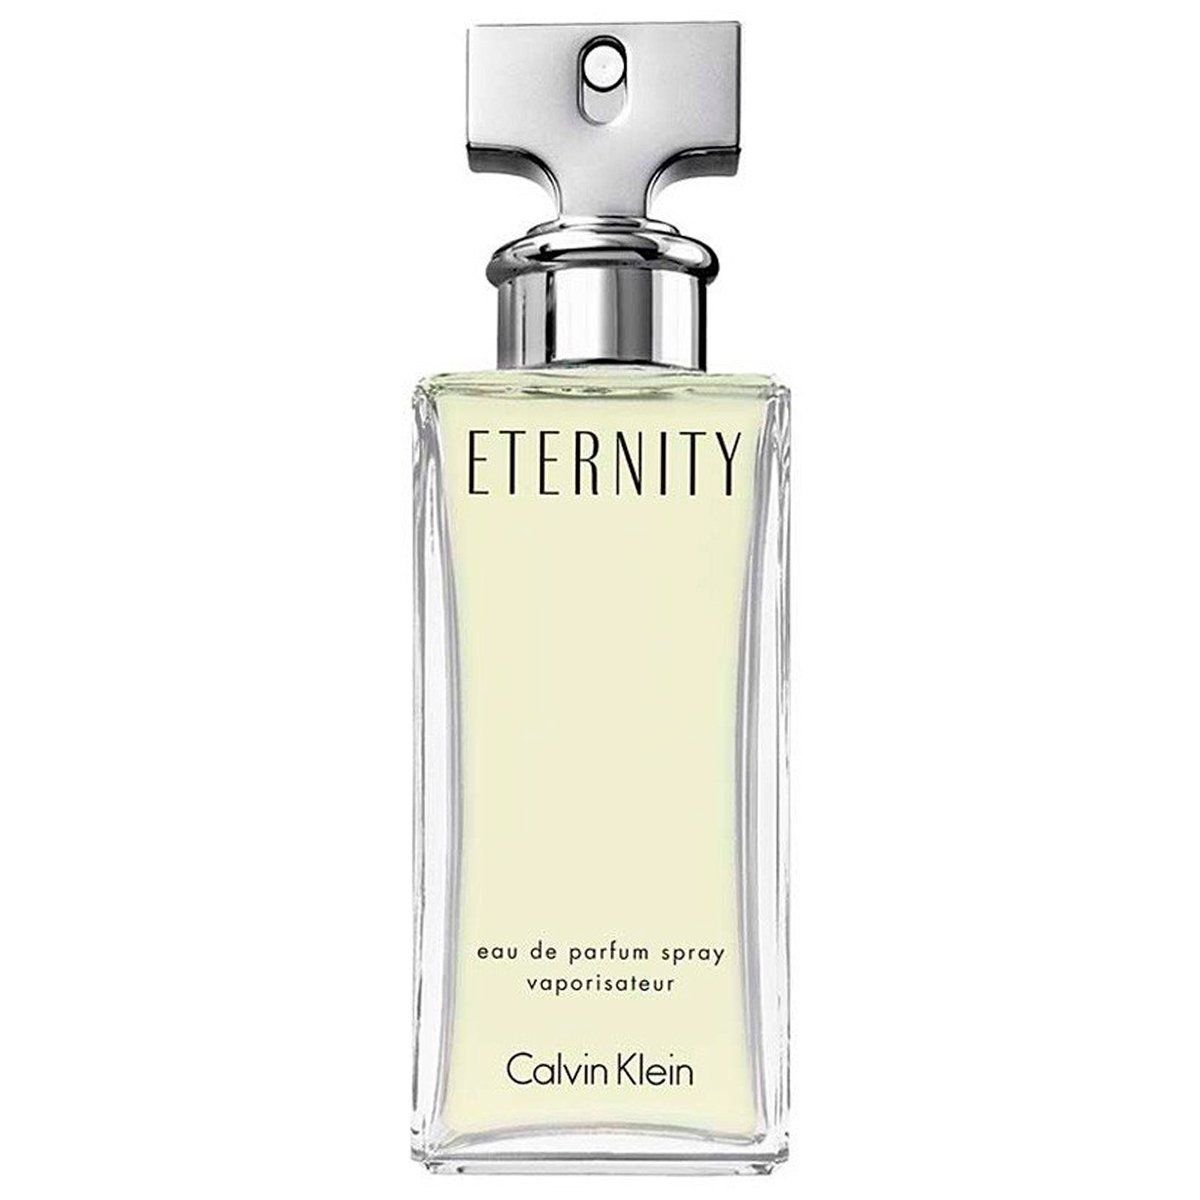  Calvin Klein Eternity Eau de Parfum 